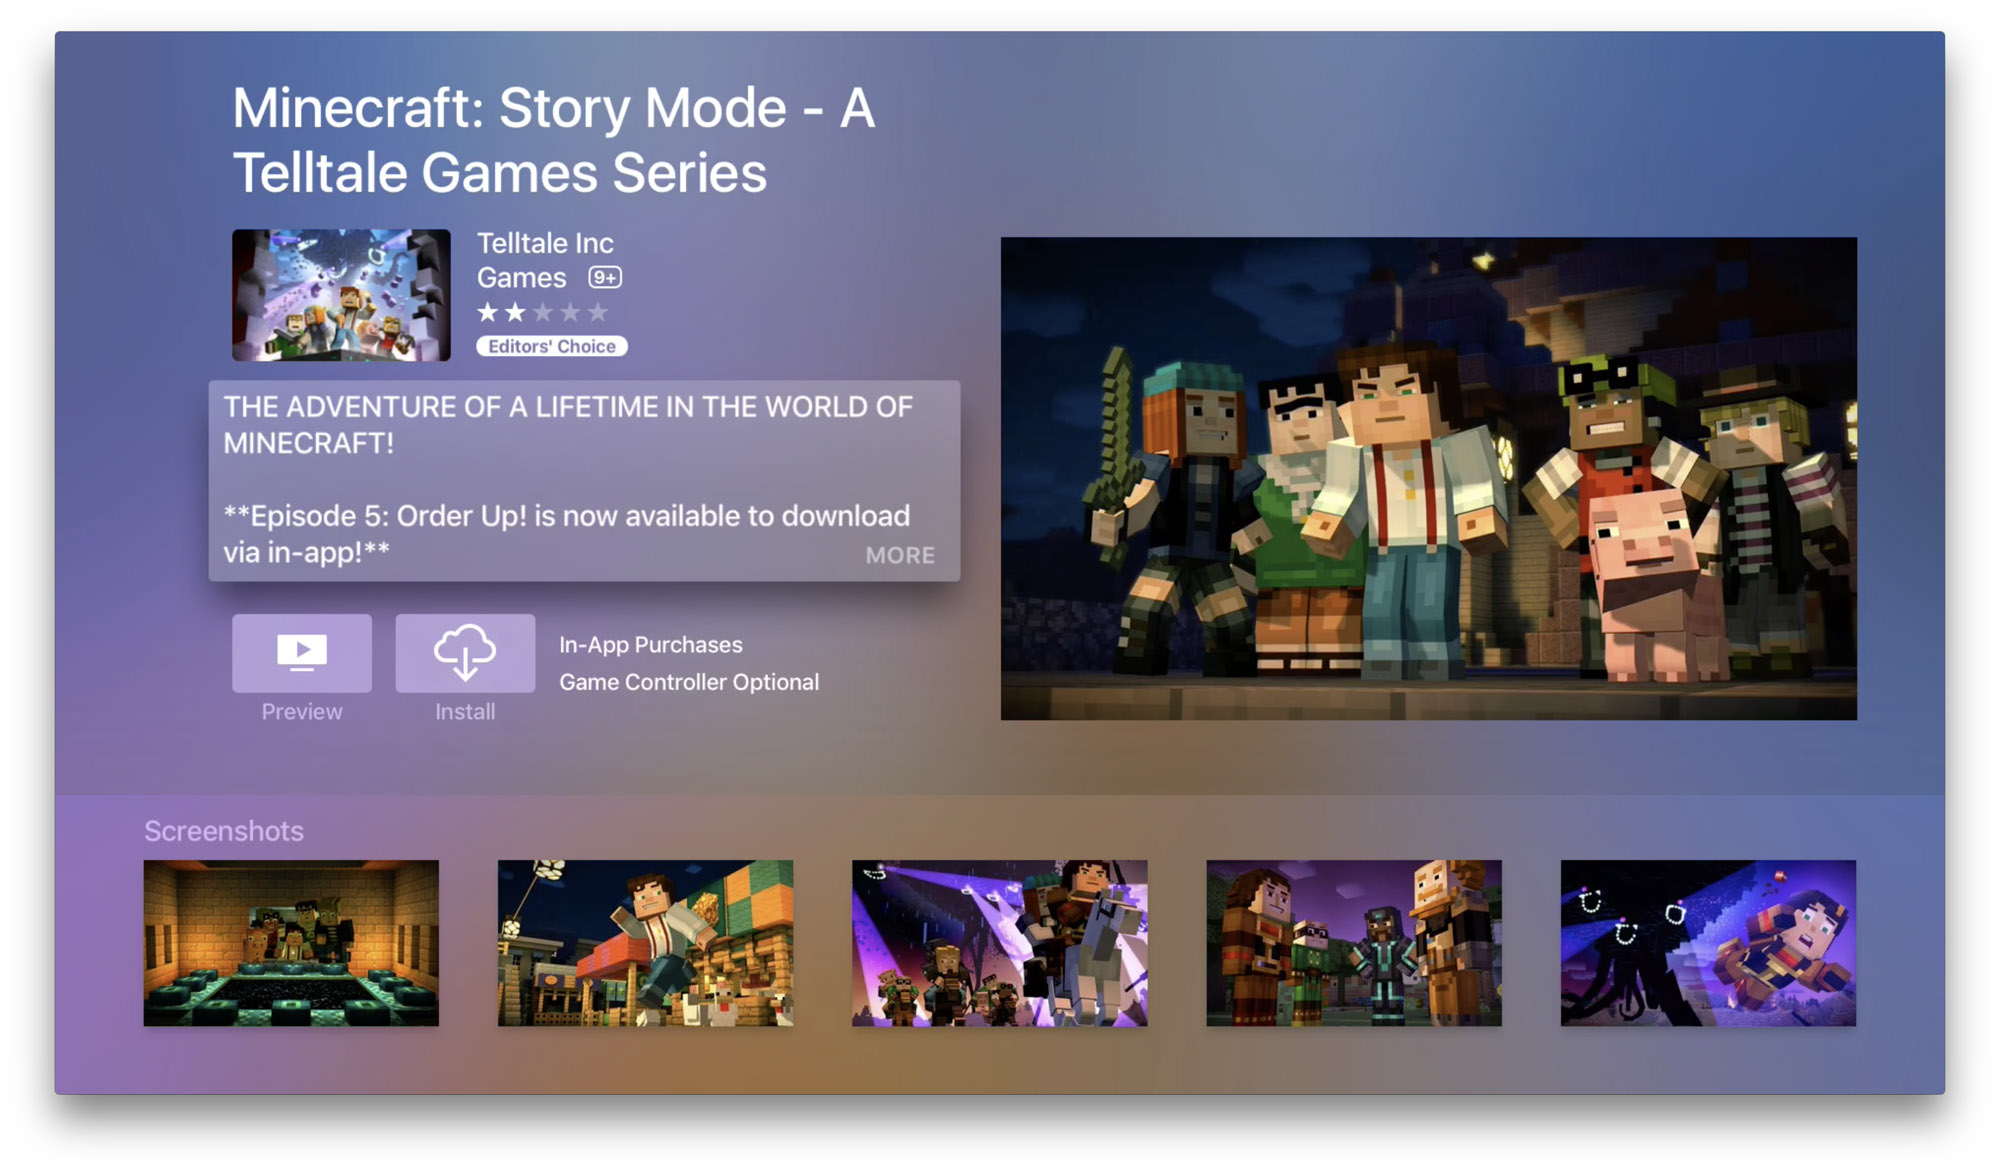 Popular virtual game Minecraft no longer on the Apple TV - Gearbrain